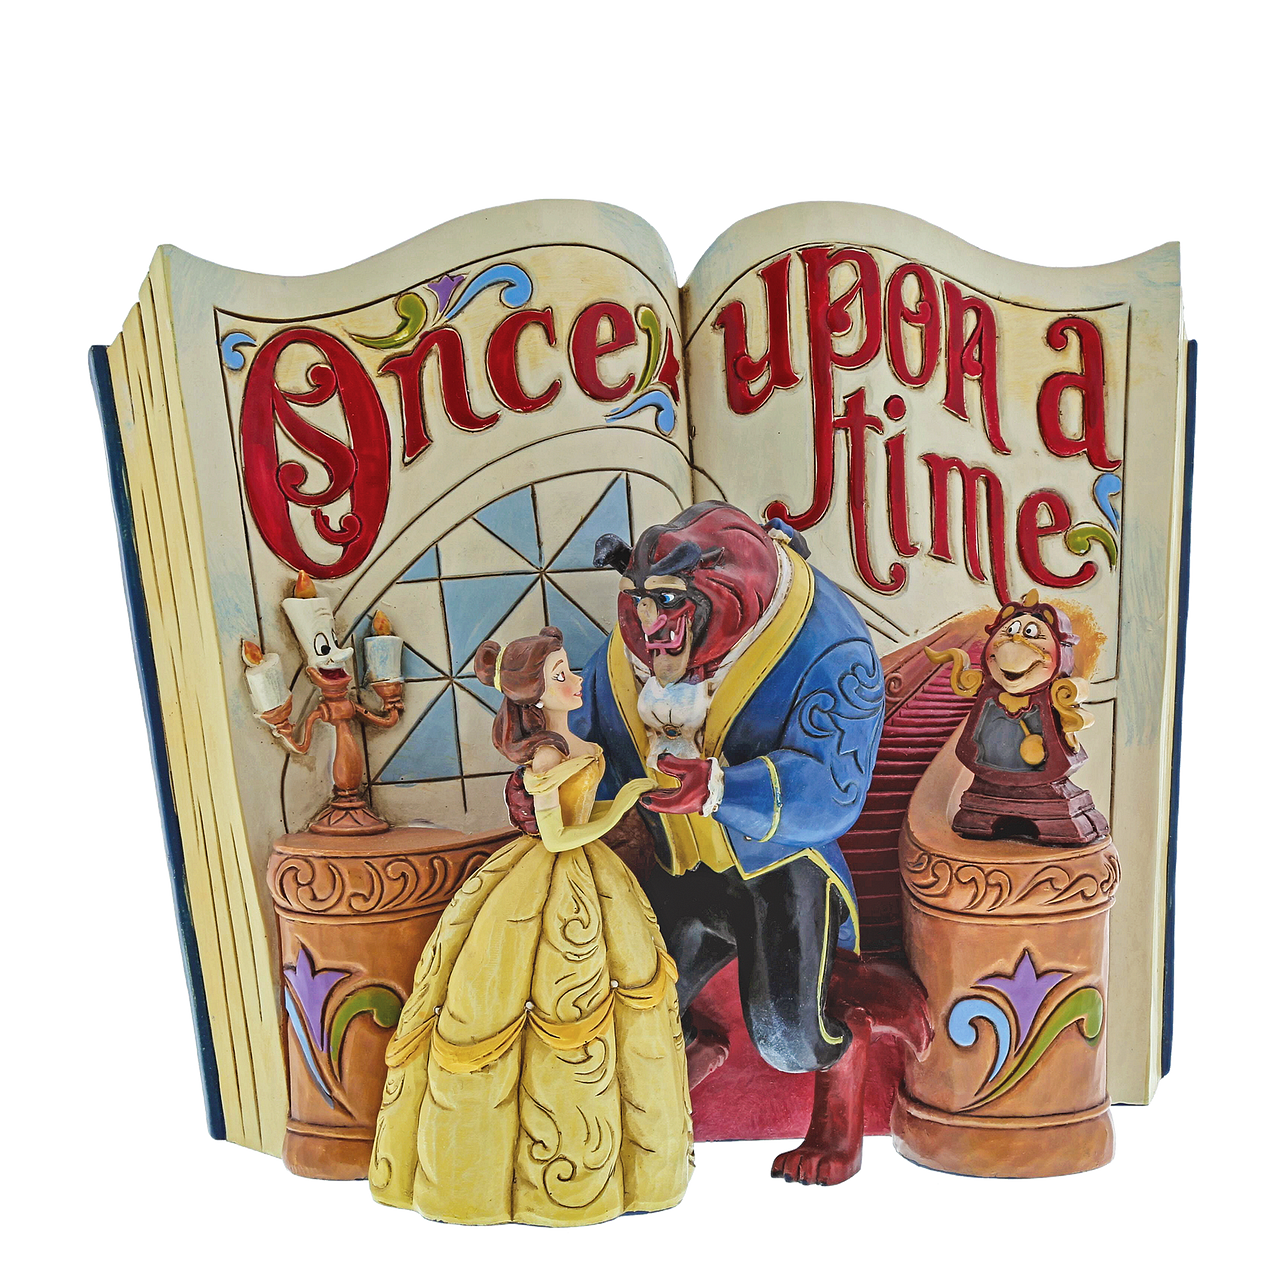 Storybook La Petite Sirène - Disney Traditions